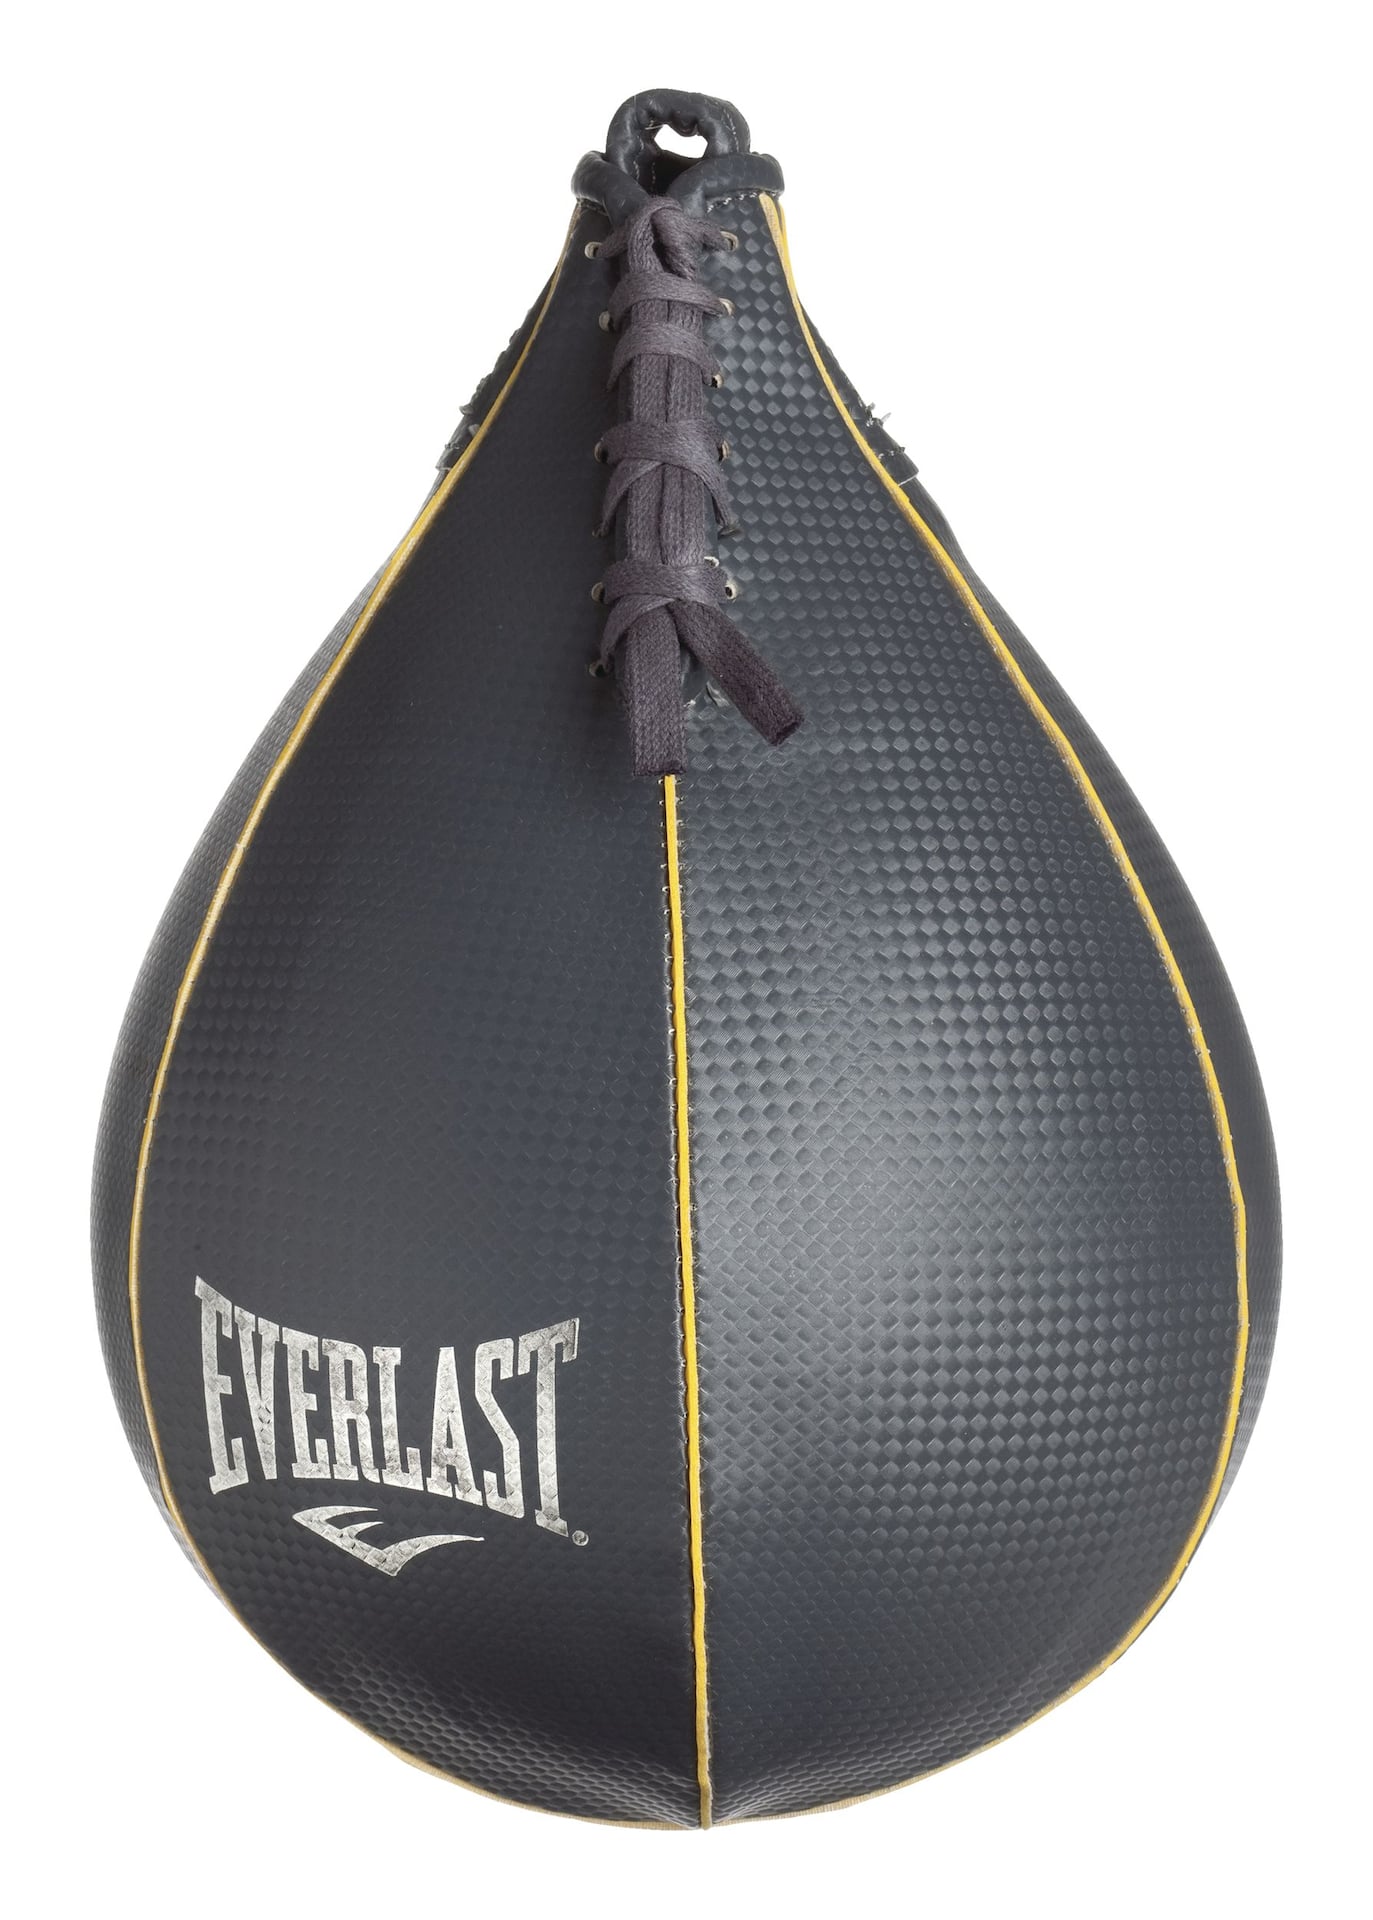 Everlast Everhide Speed Bag for Boxing, Black, 6-in